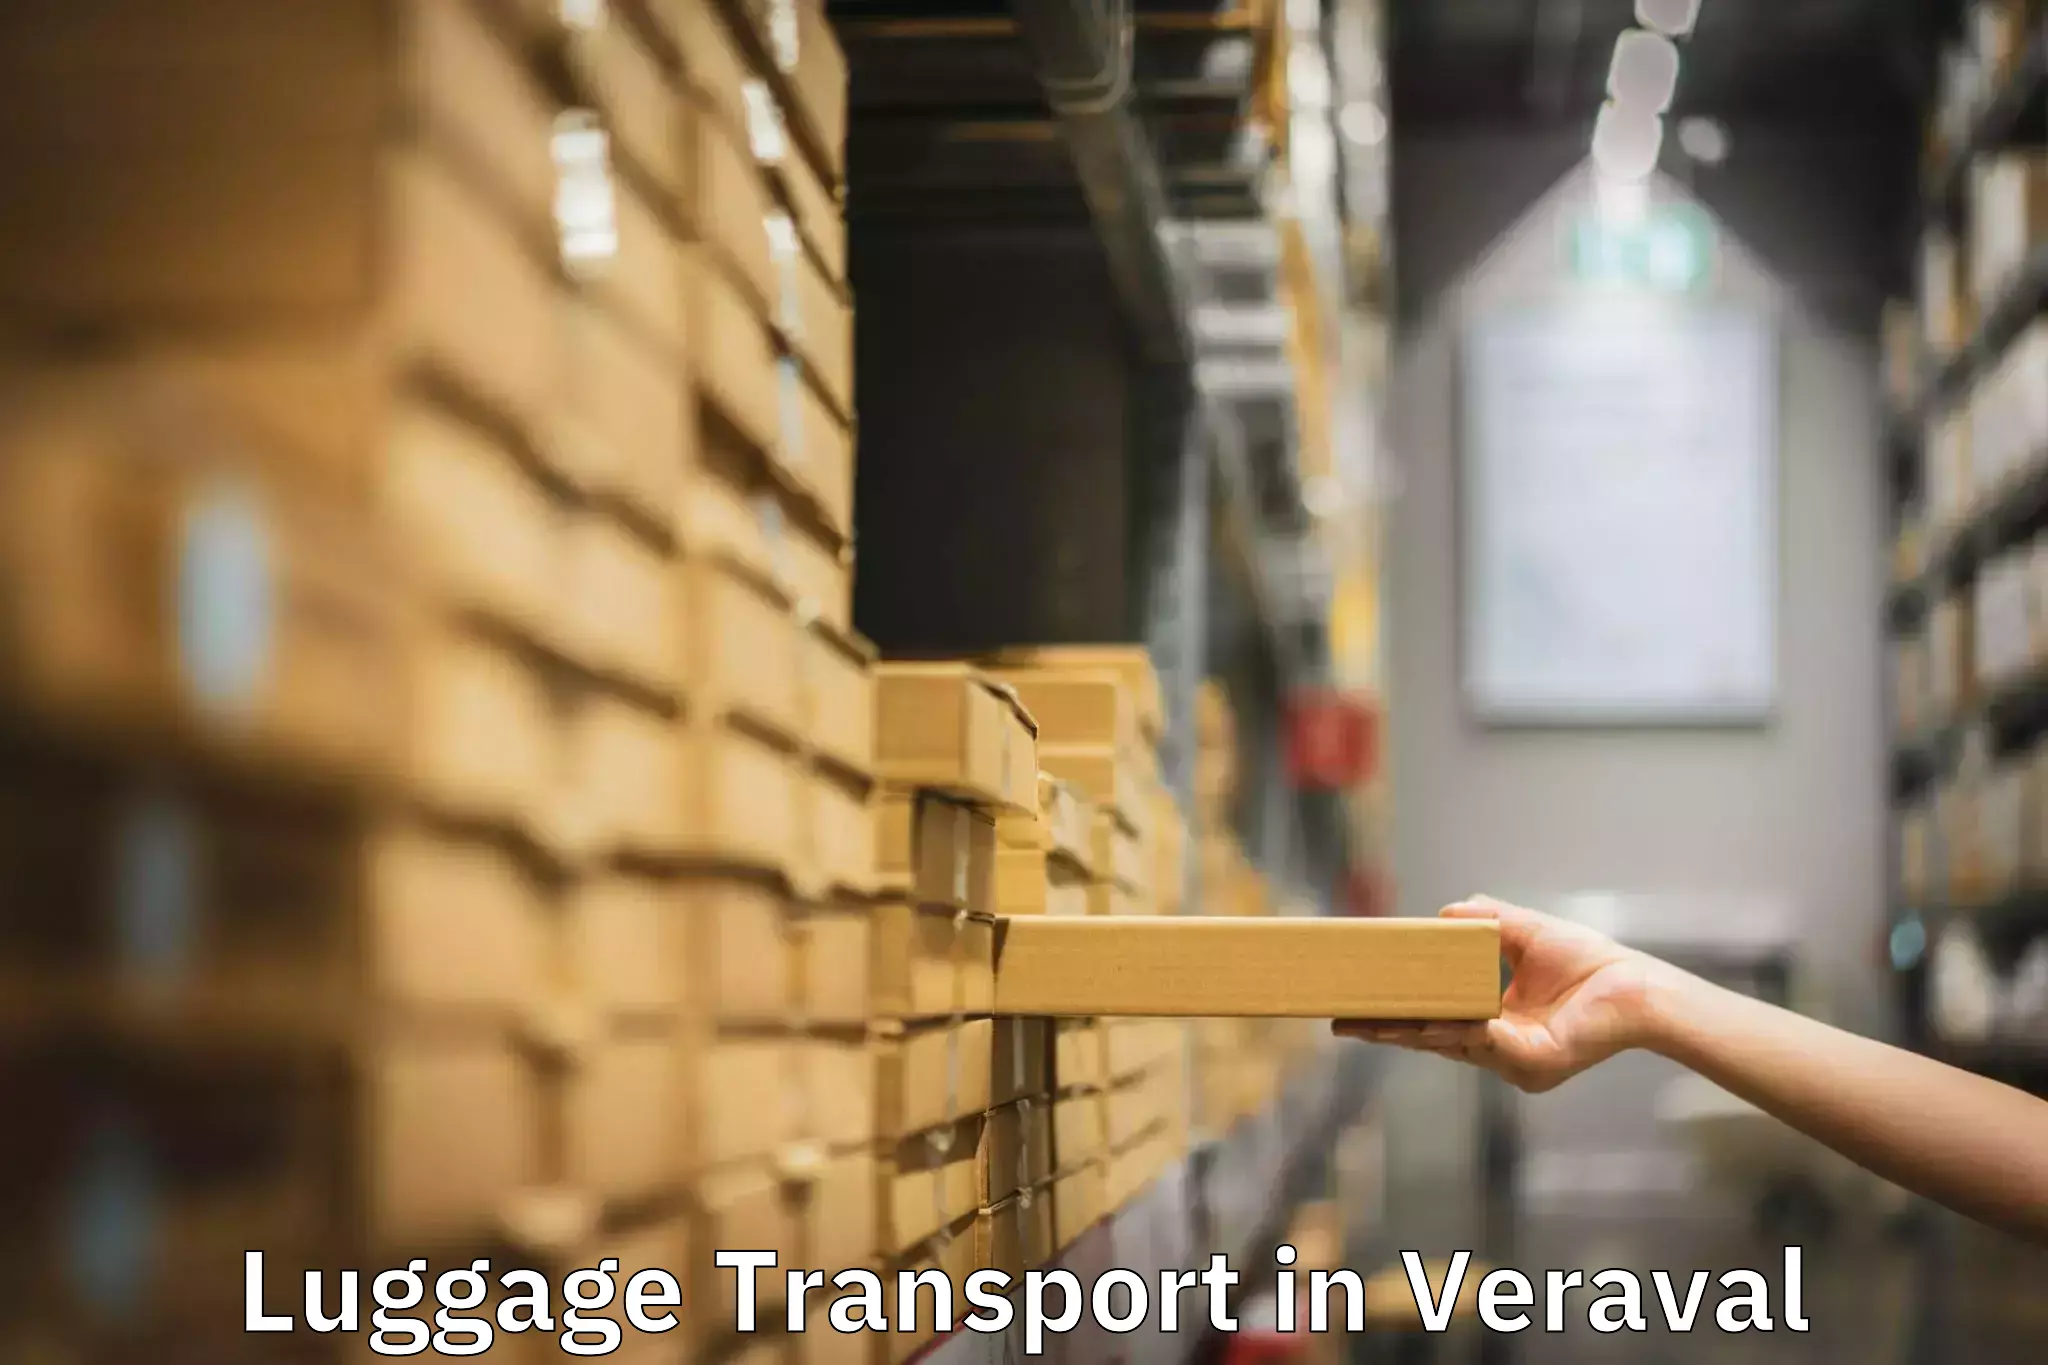 Luggage transit service in Veraval